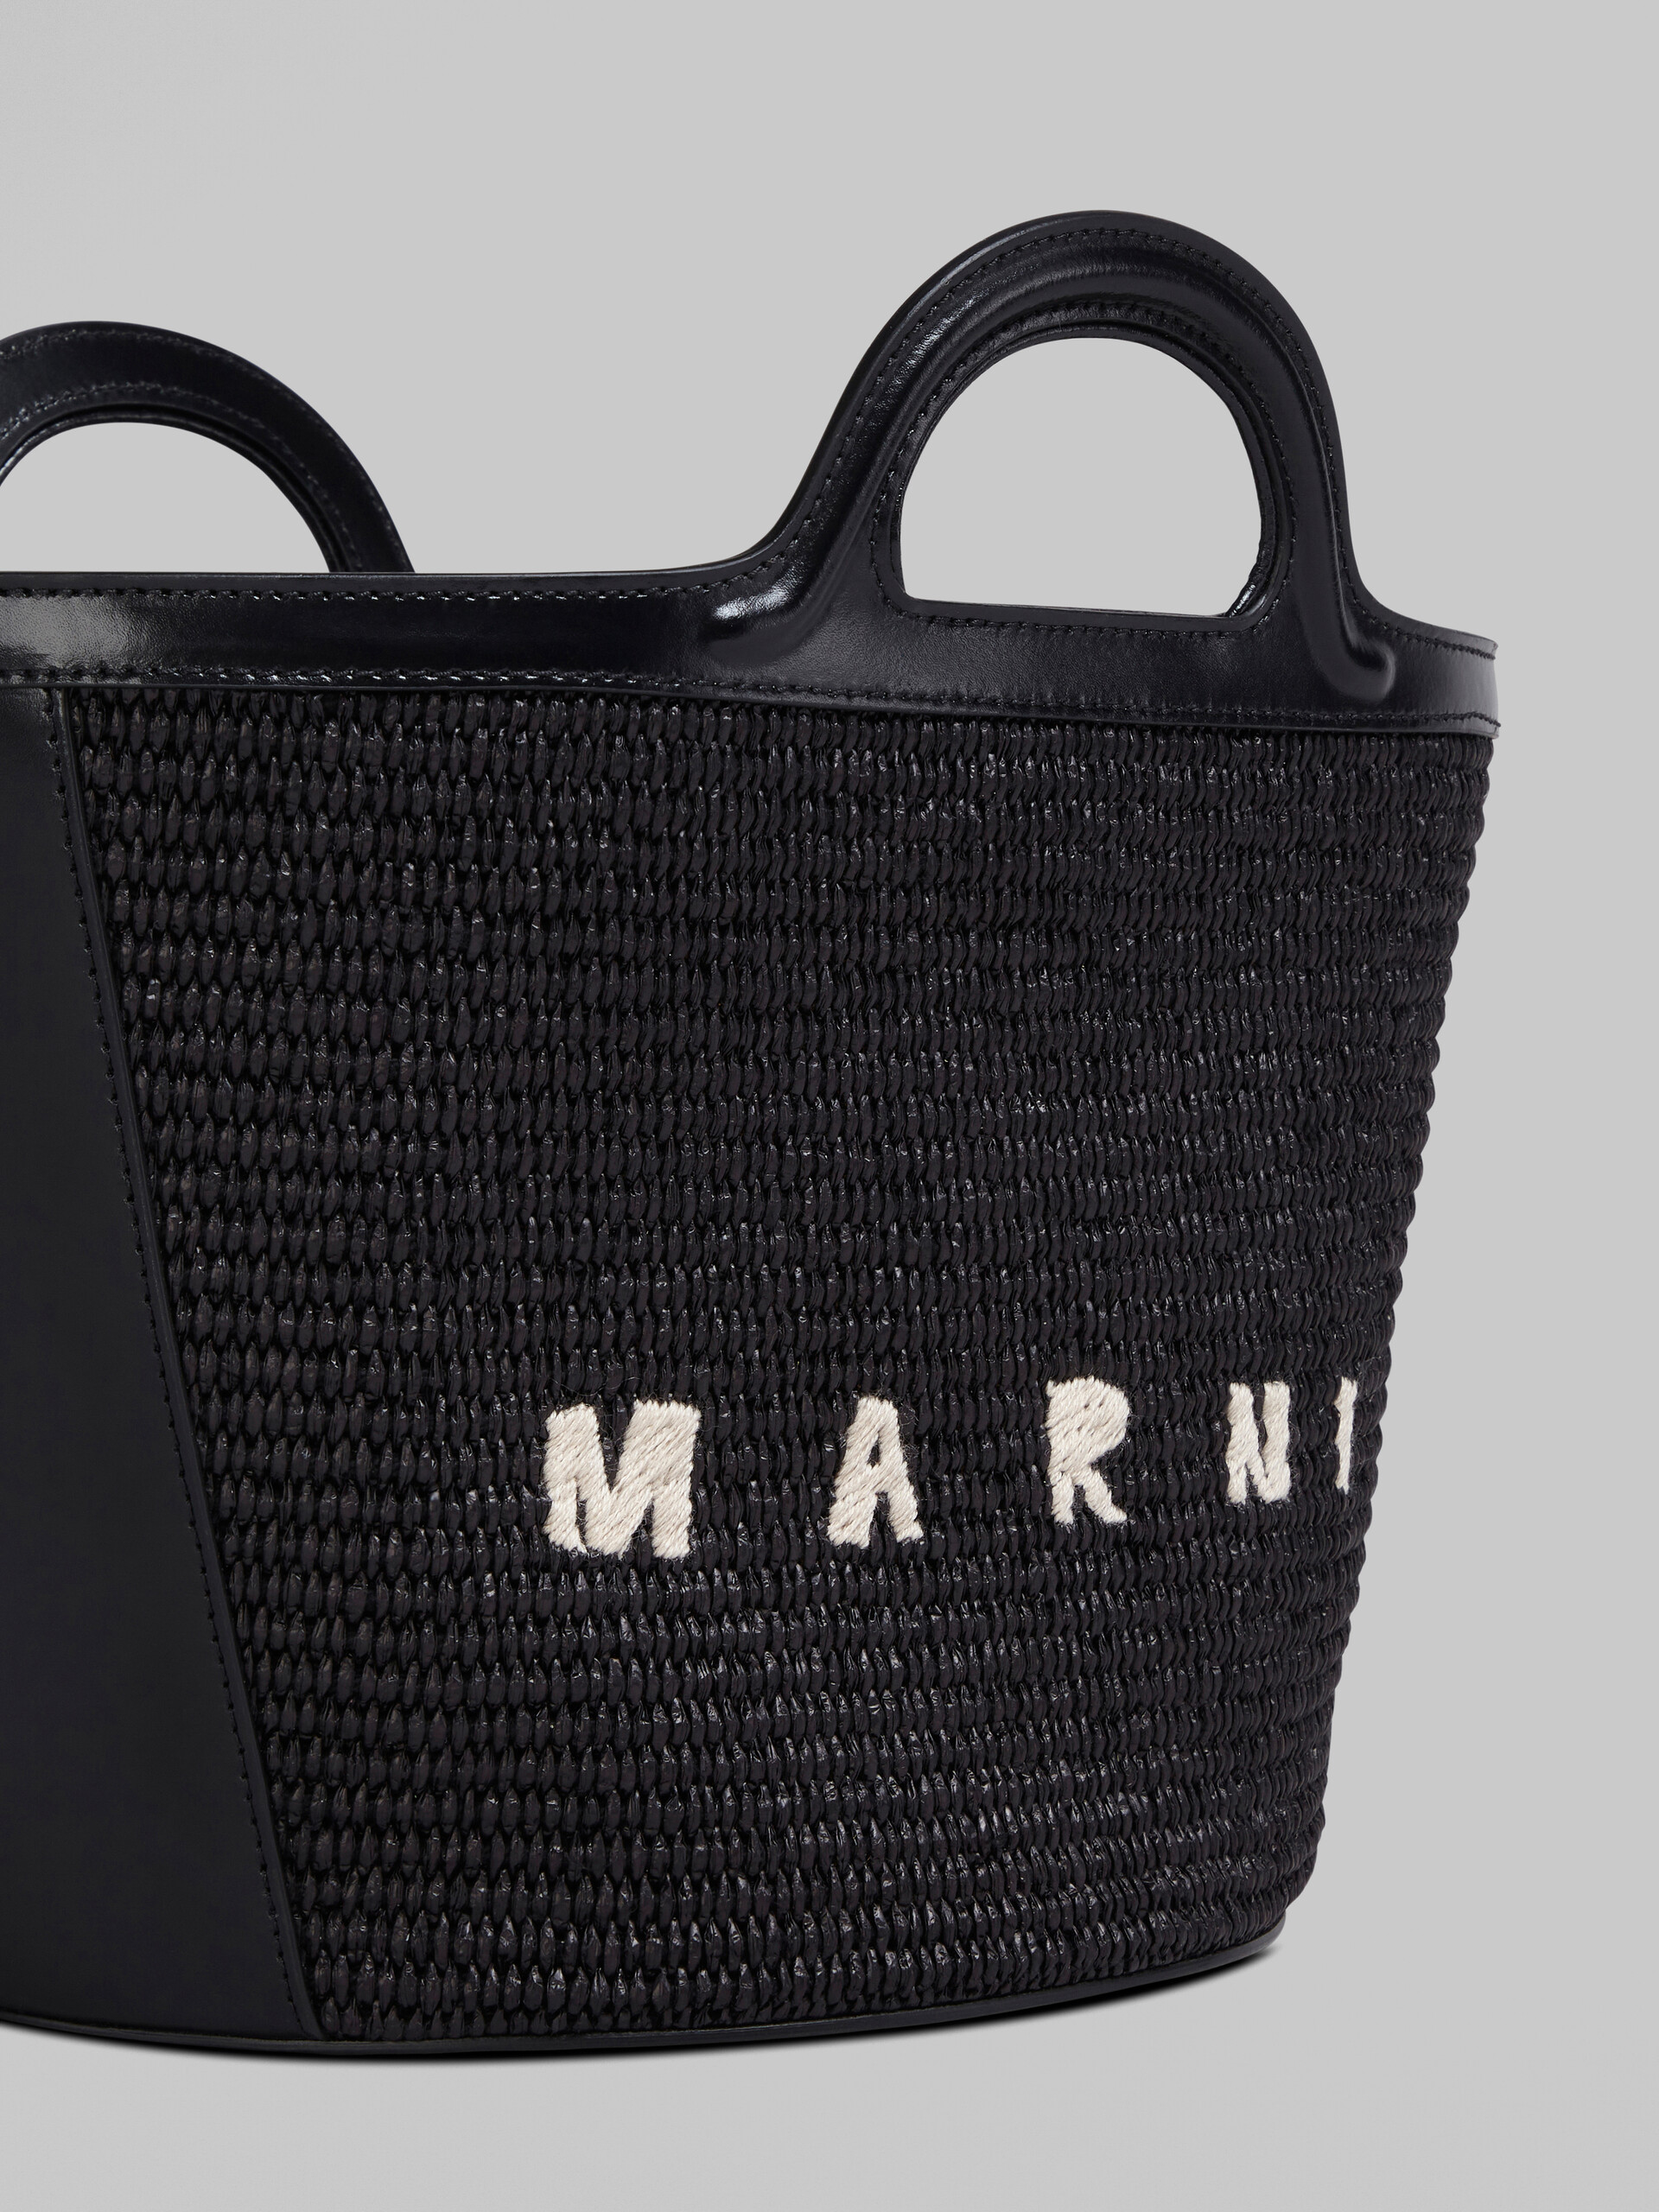 TROPICALIA small bag in black leather and raffia - Handbag - Image 5